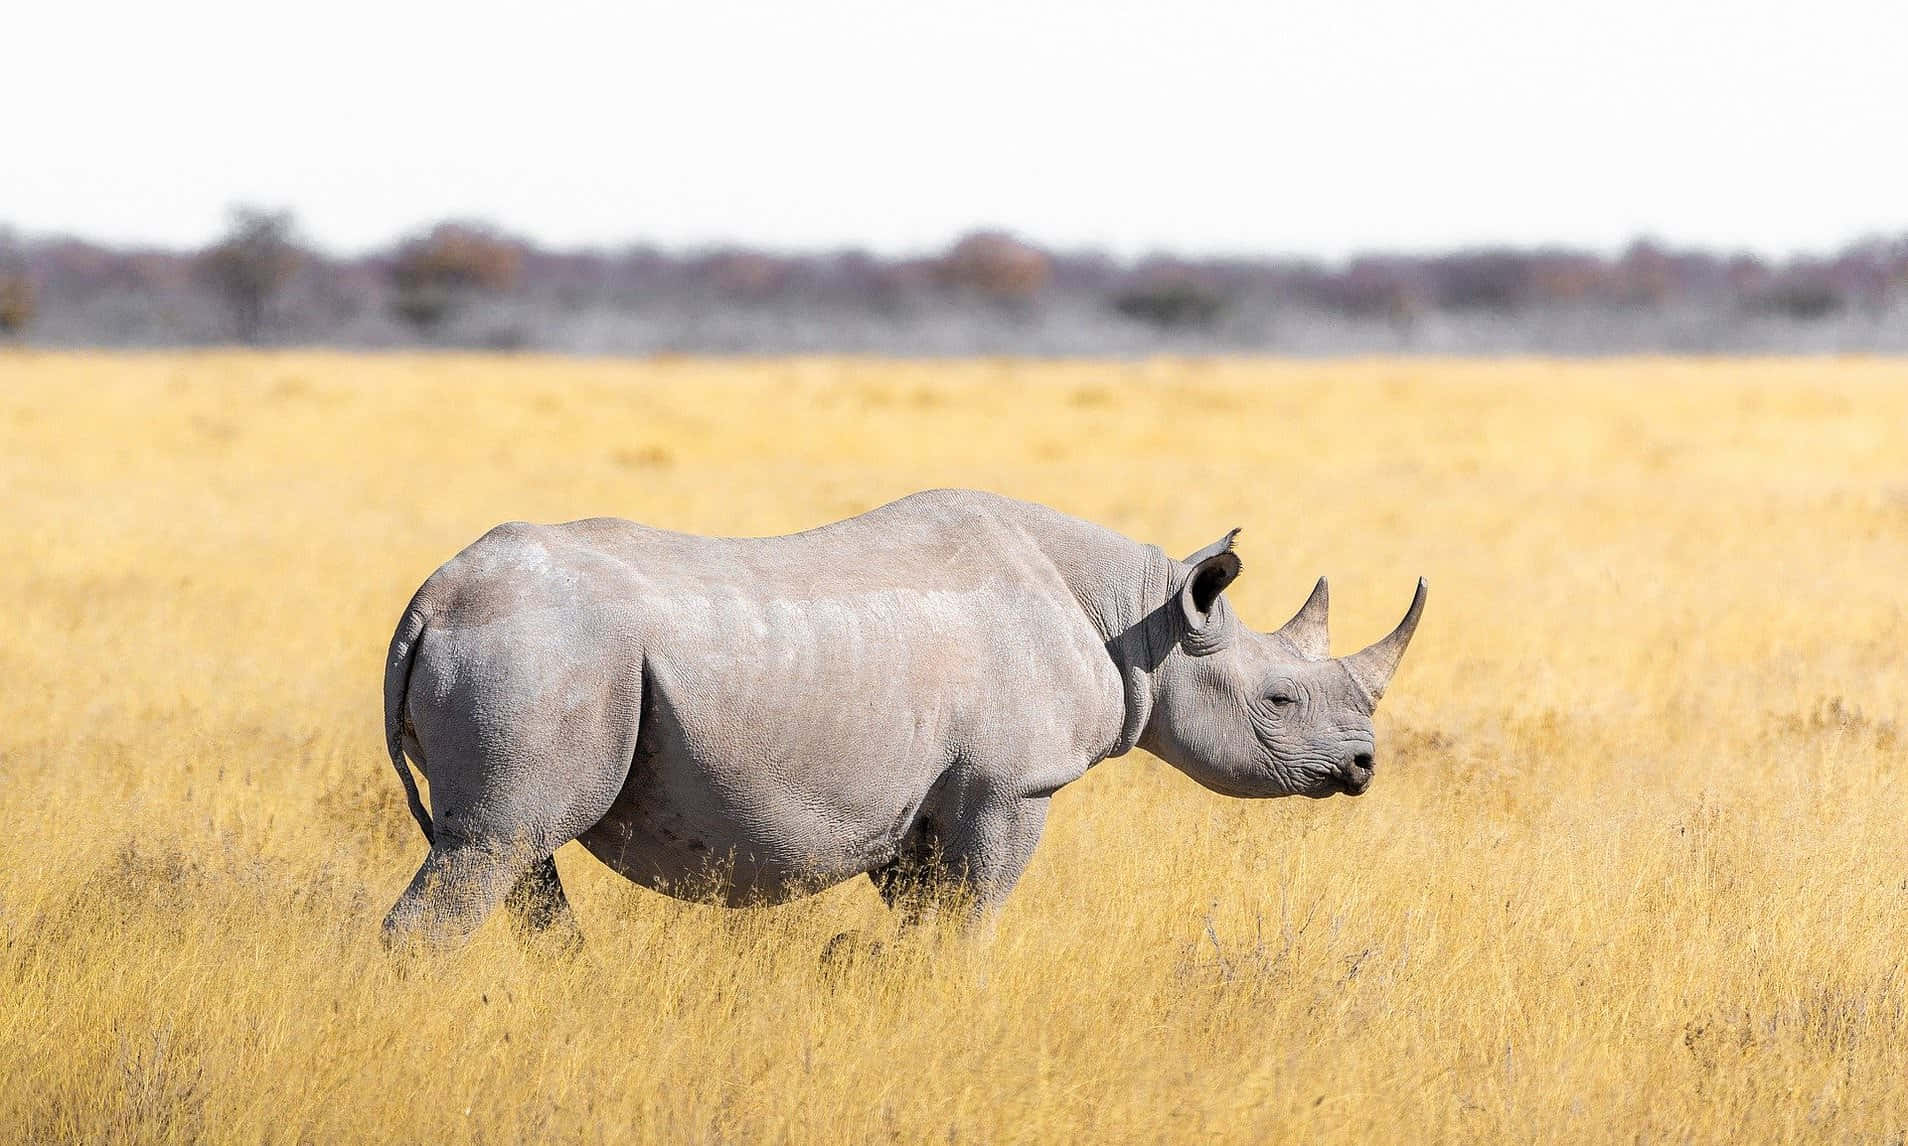 A Rhino In The Grass